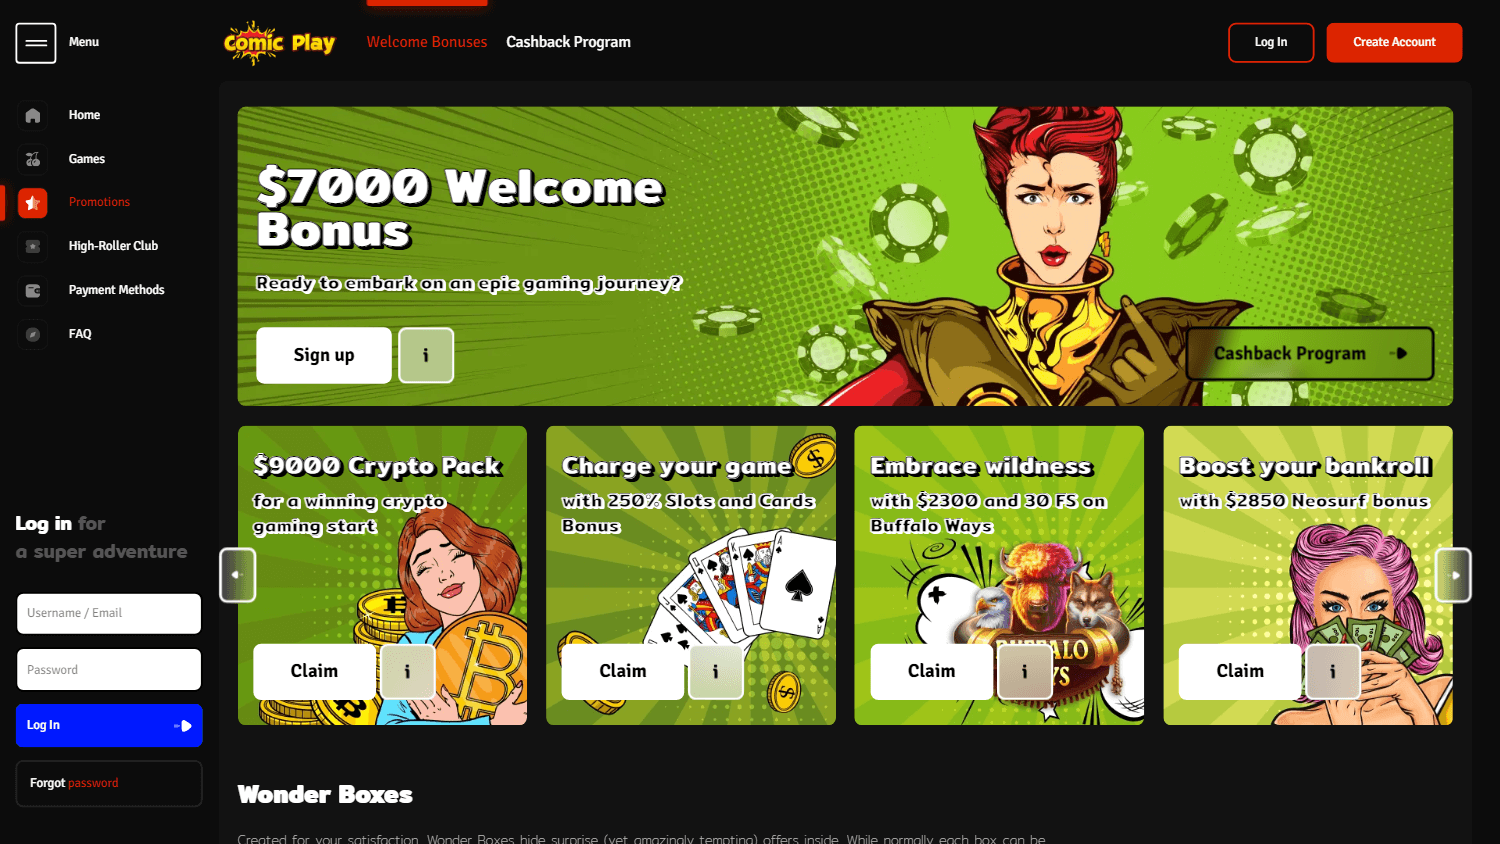 comicplay_casino_promotions_desktop